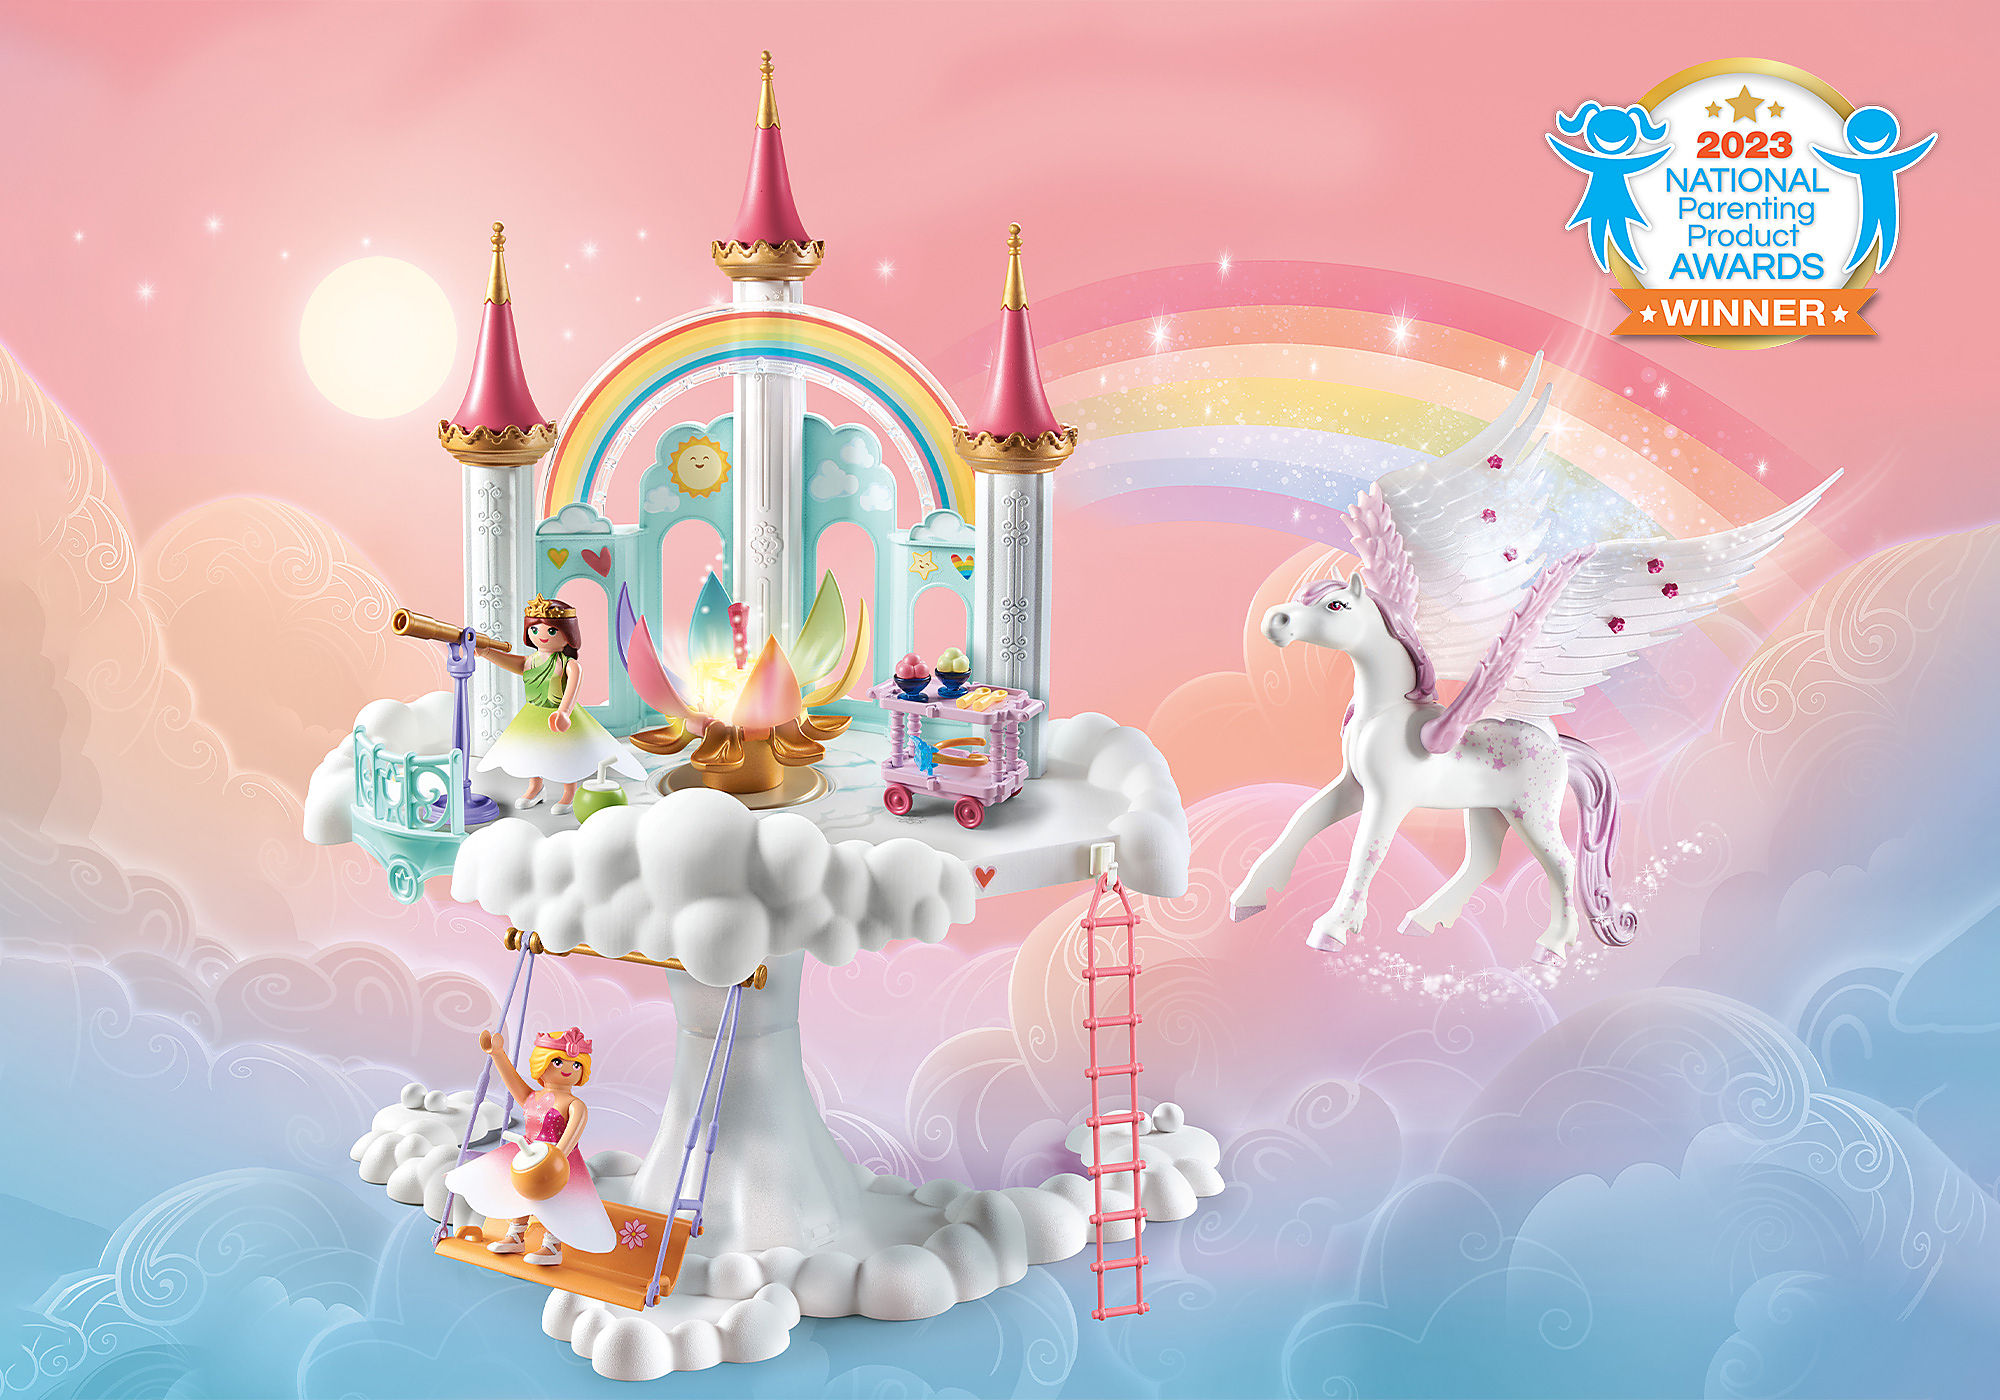 Playmobil Princess 5063 château de princesse avec Pegasus - Château fort  Playmobil